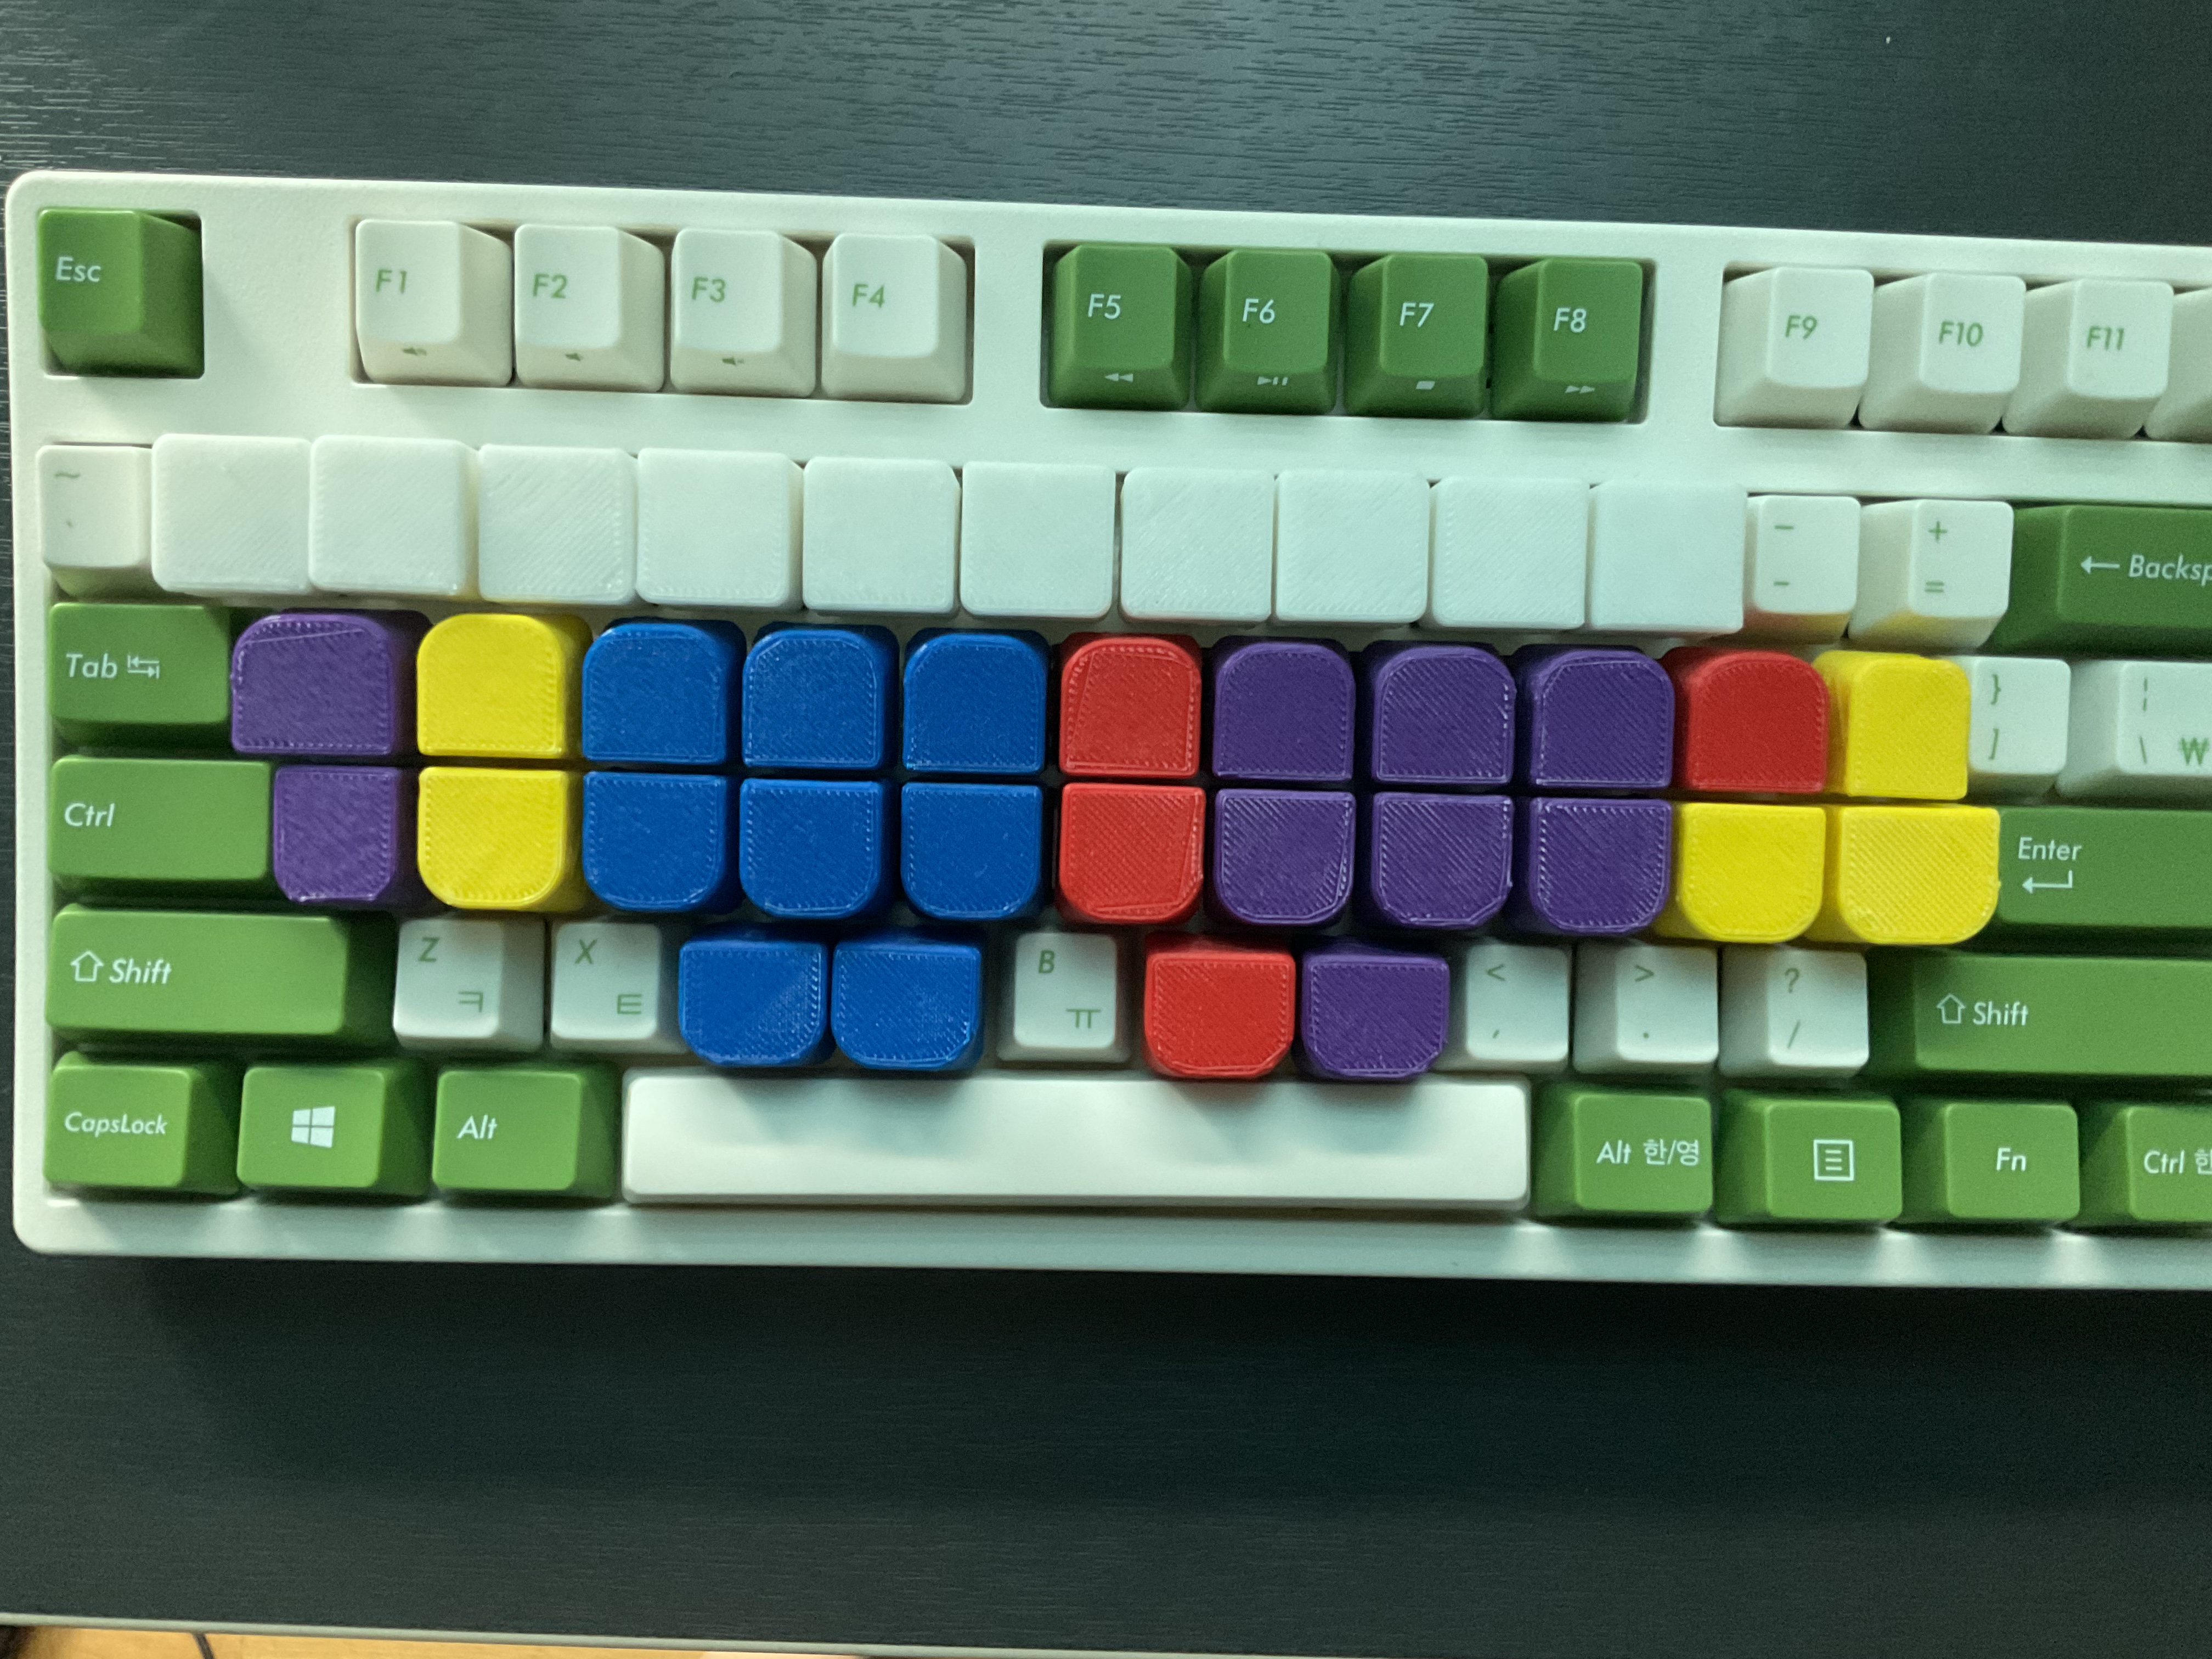 keyboard1